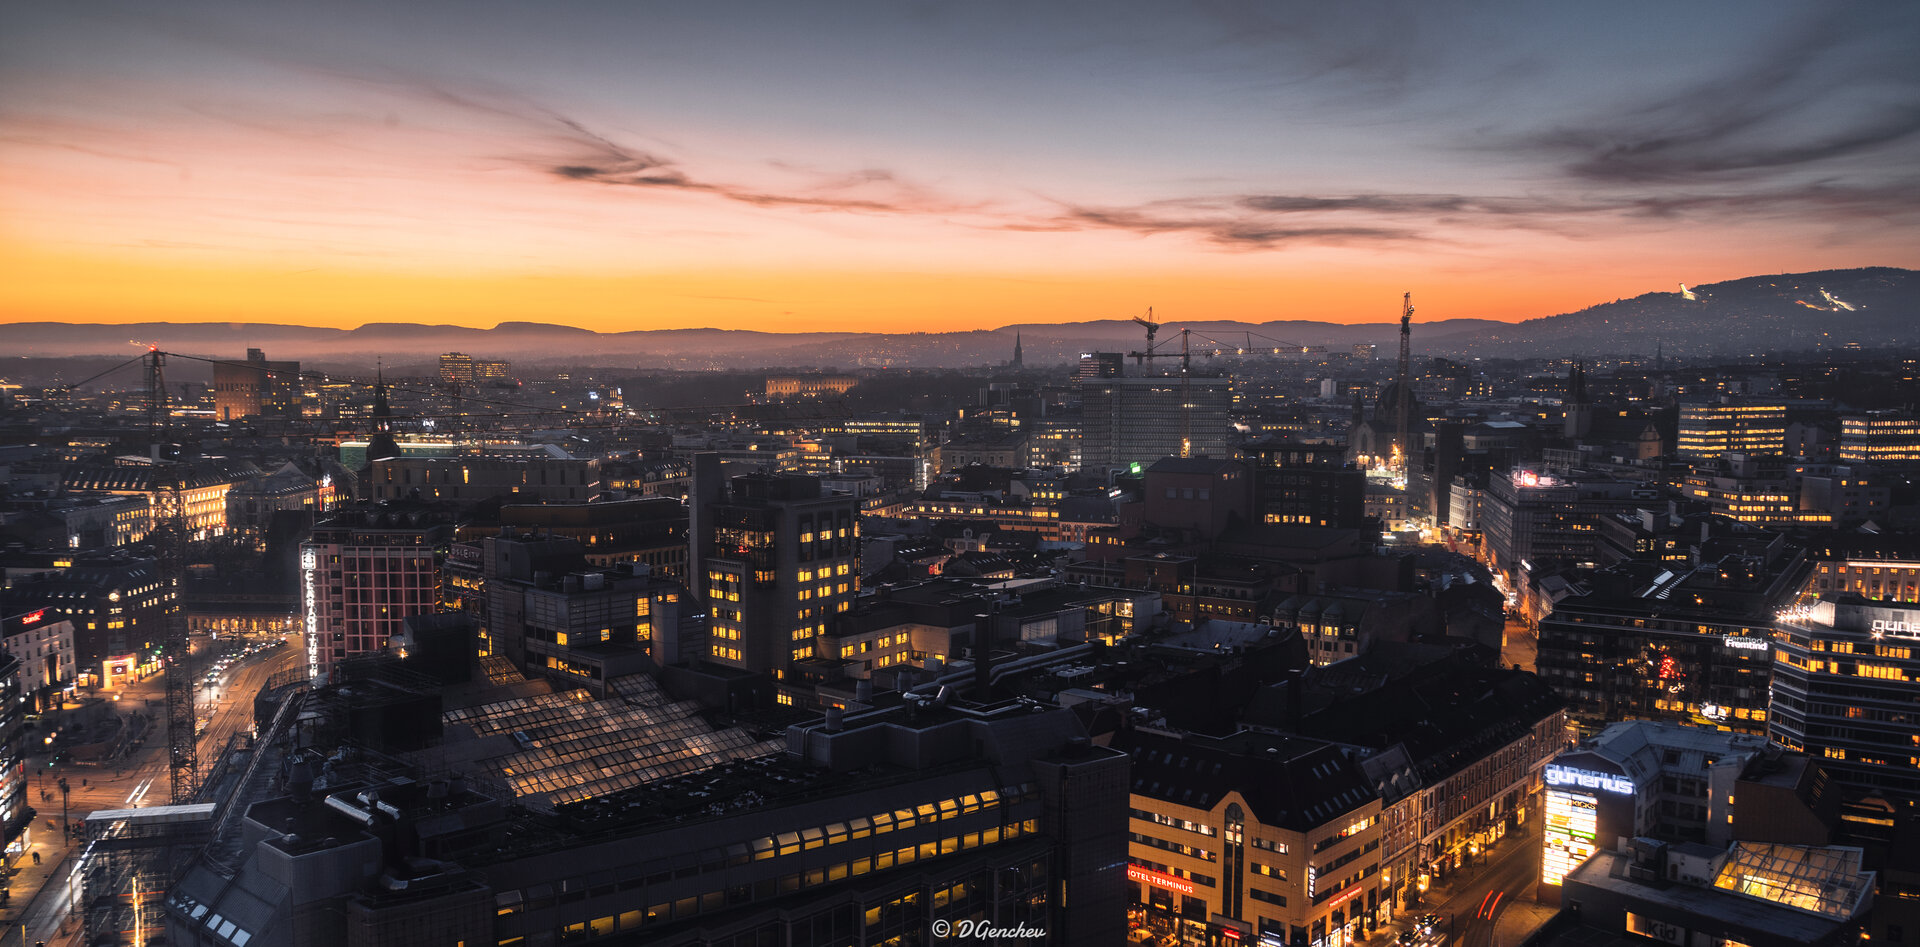 Sunset in Oslo | Author Dimitar Genchev - bogy82 | PHOTO FORUM